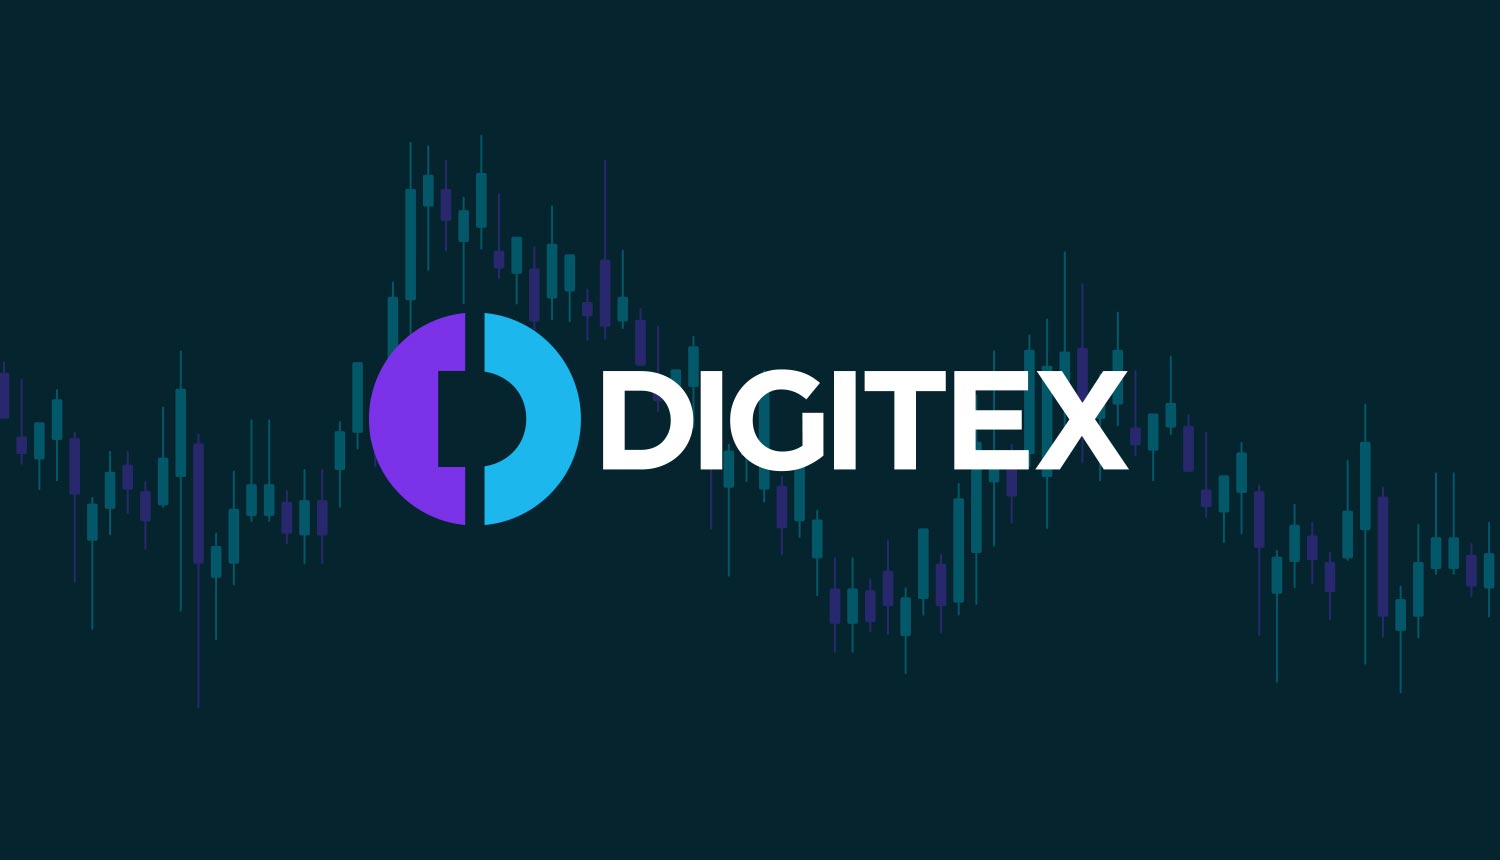  digitex price futures drops board across lot 